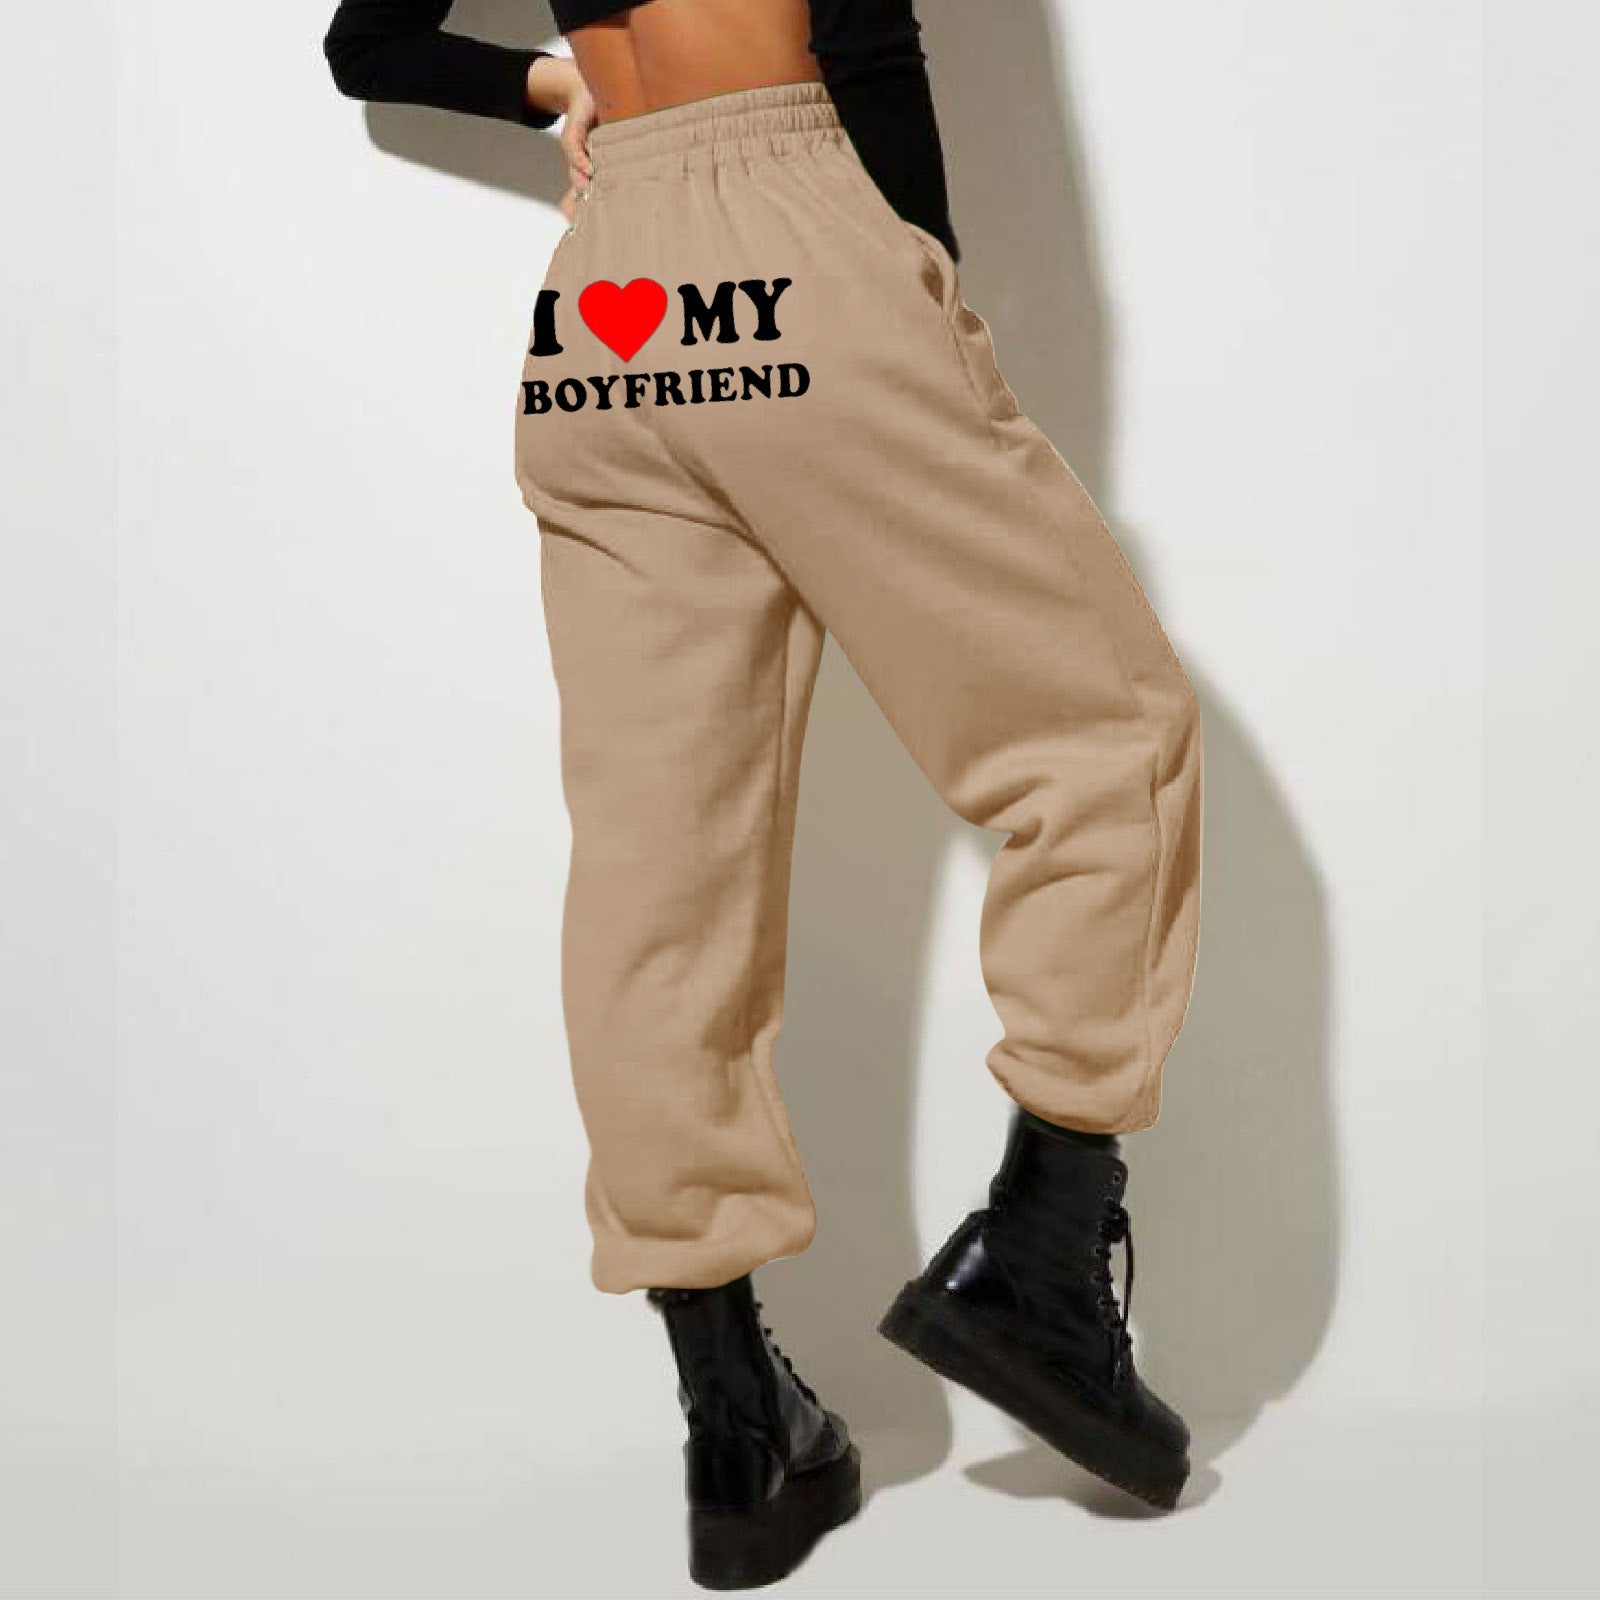 I Love MY BOYFRIEND Printed Trousers Casual Sweatpants Men And Women Sports Pants